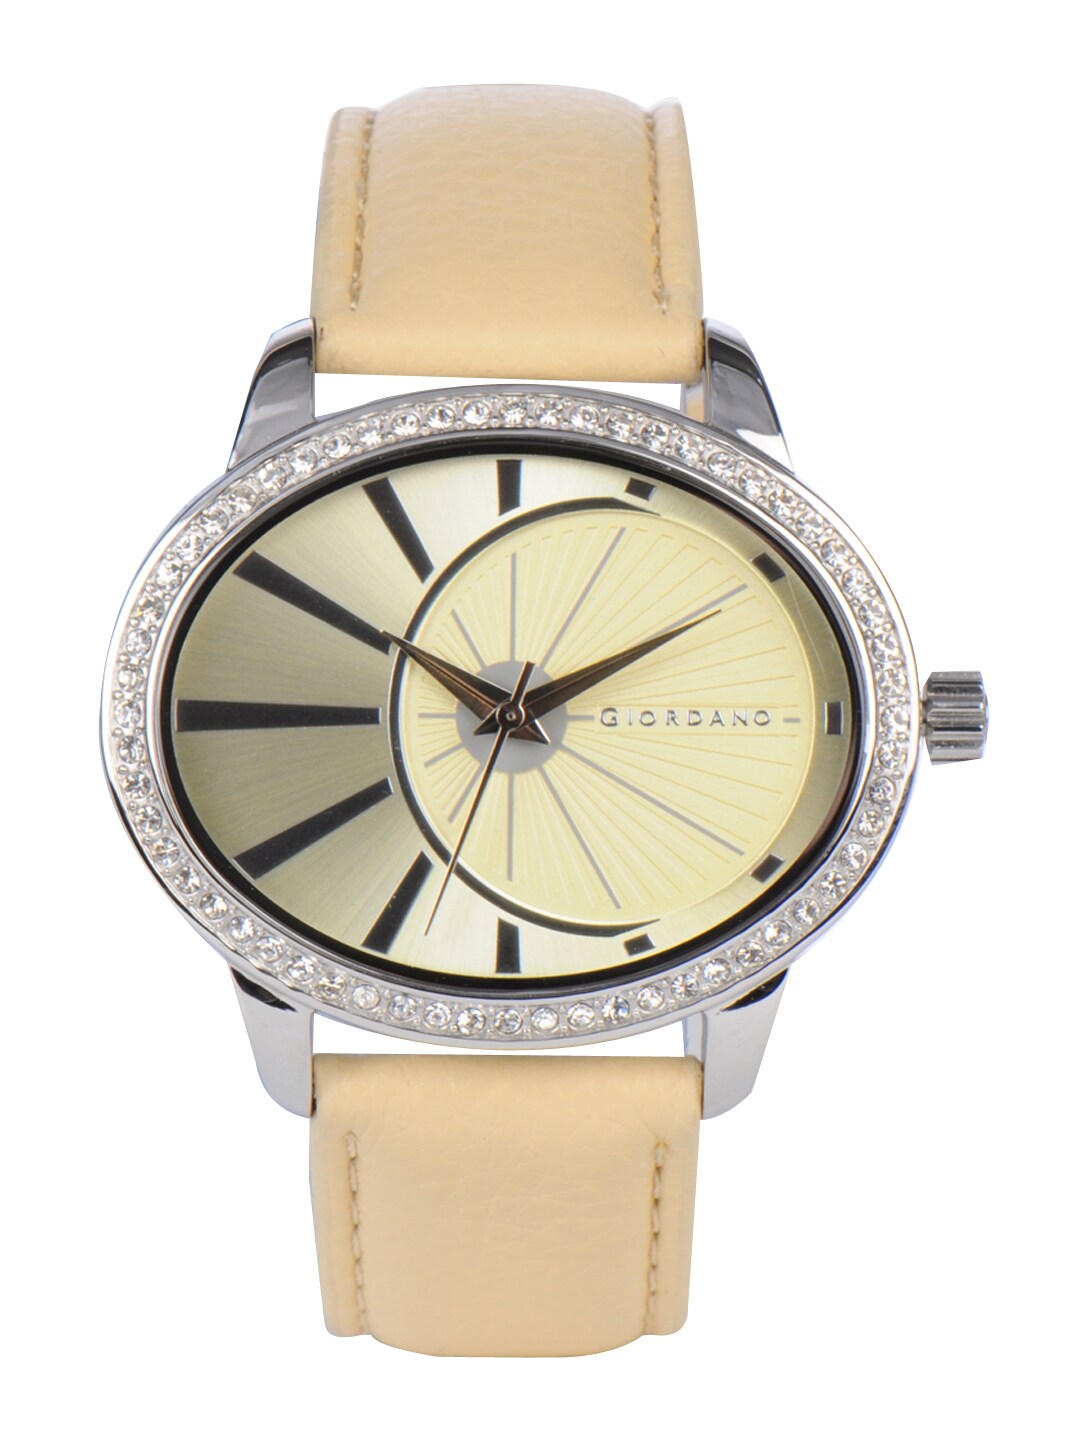 Giordano Women Cream Dial Watch